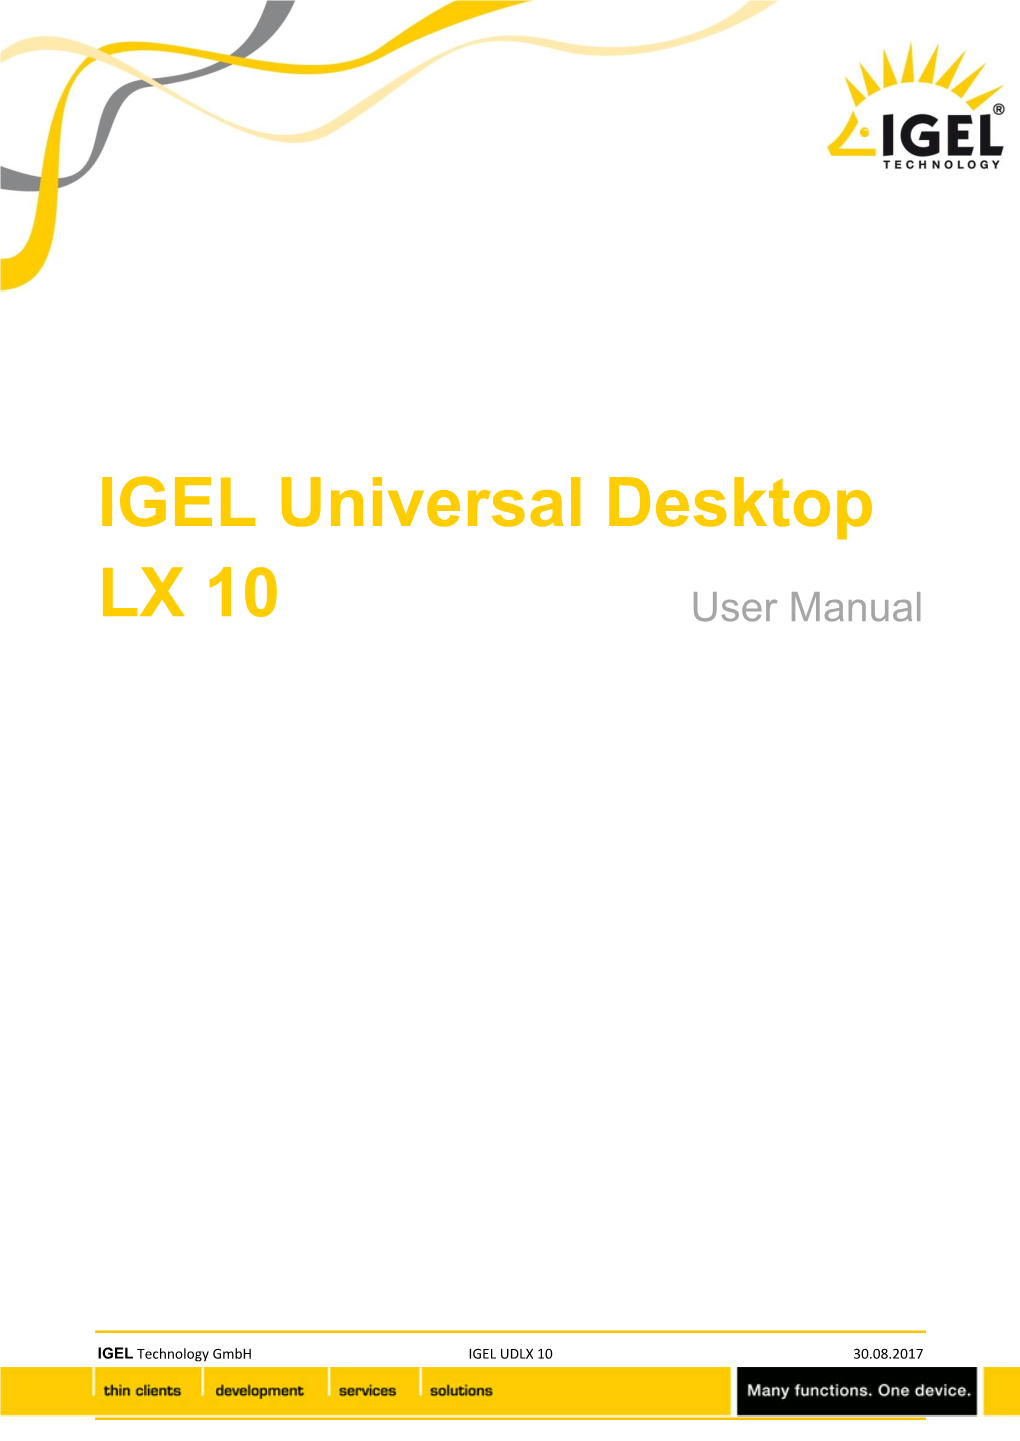 IGEL Universal Desktop LX 10